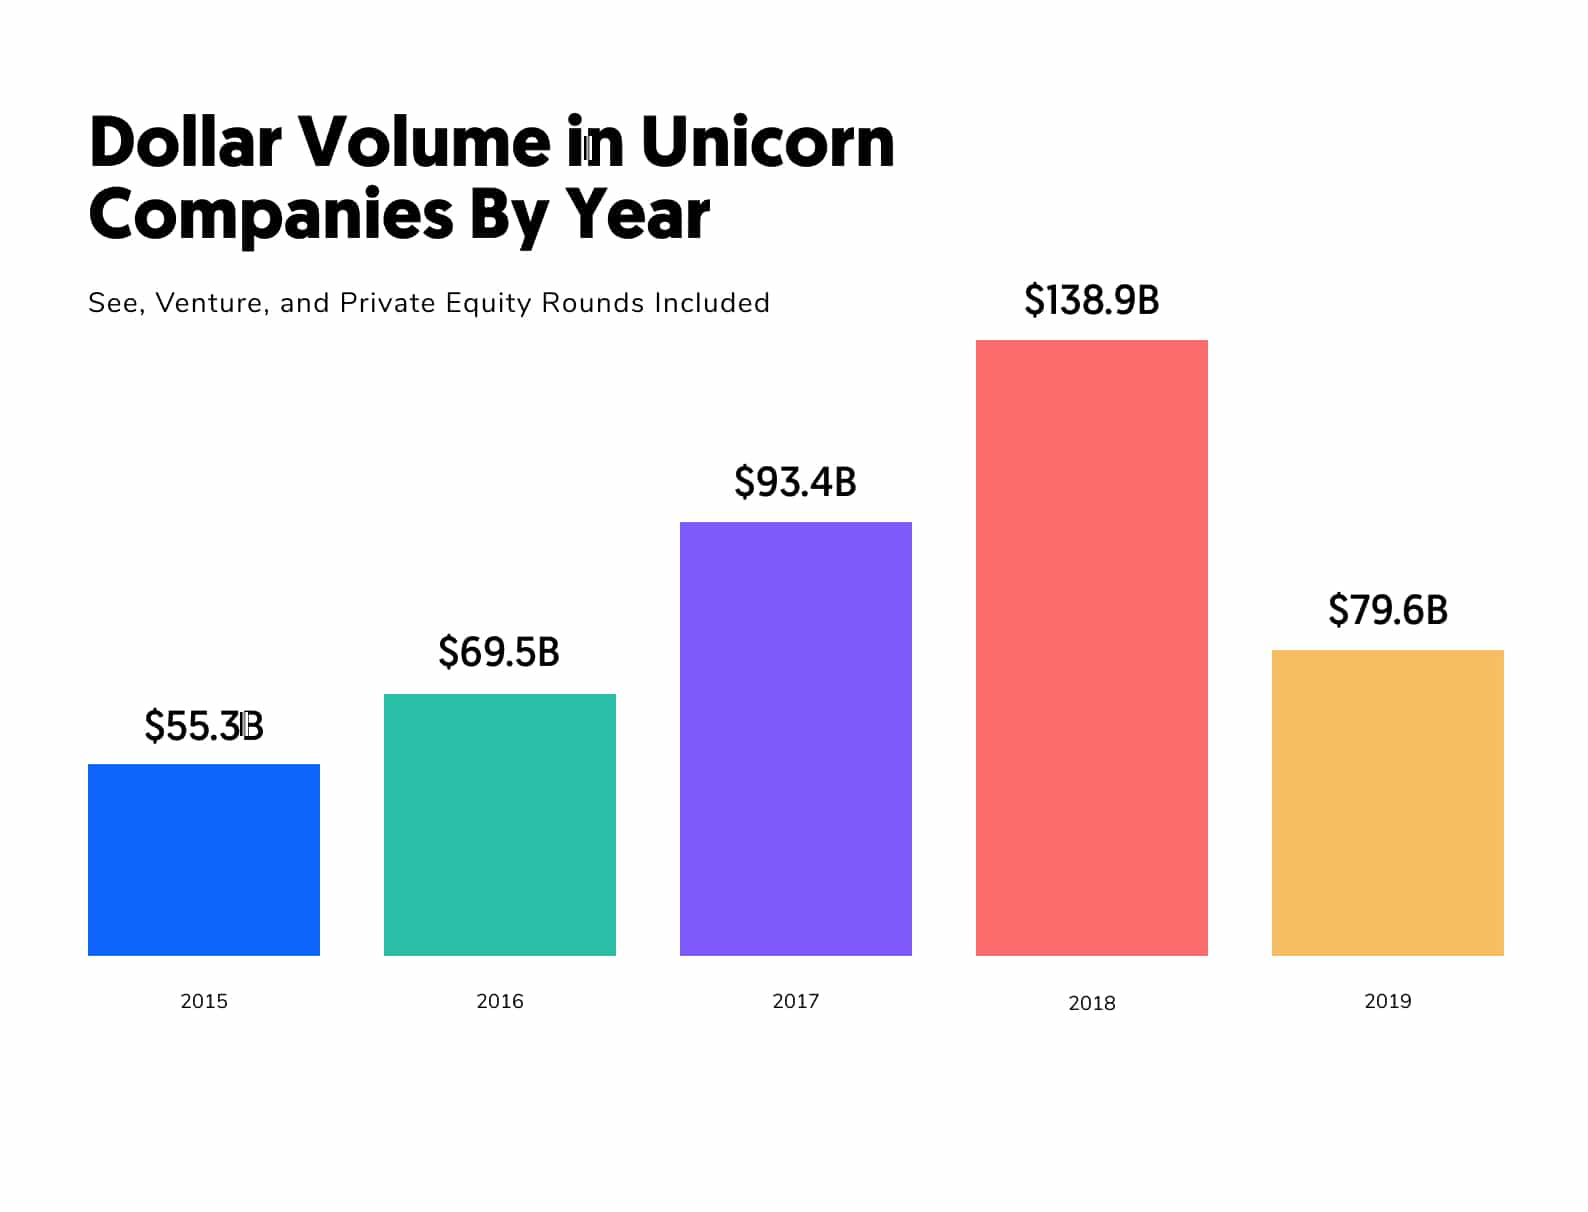 Dollar volume in unicorn companies by year